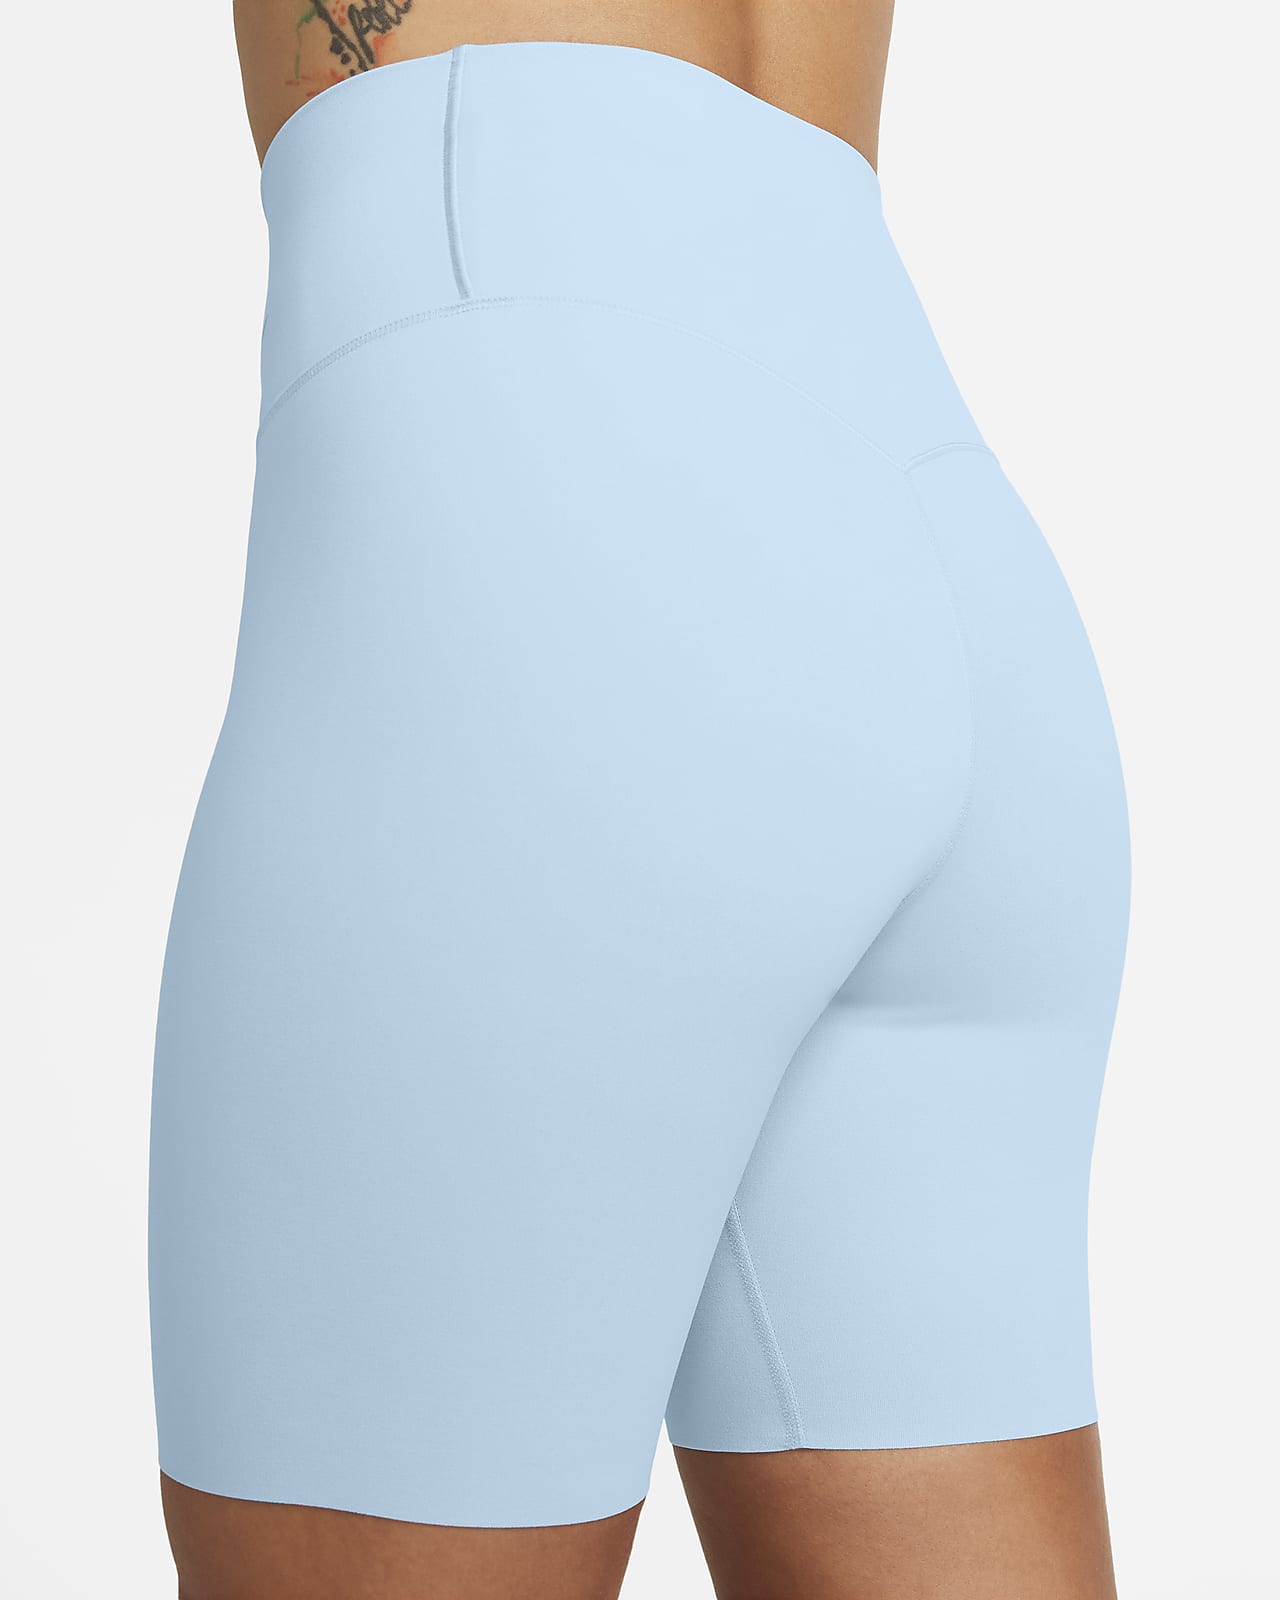 Cute Light Blue Gym Bike Shorts for Women